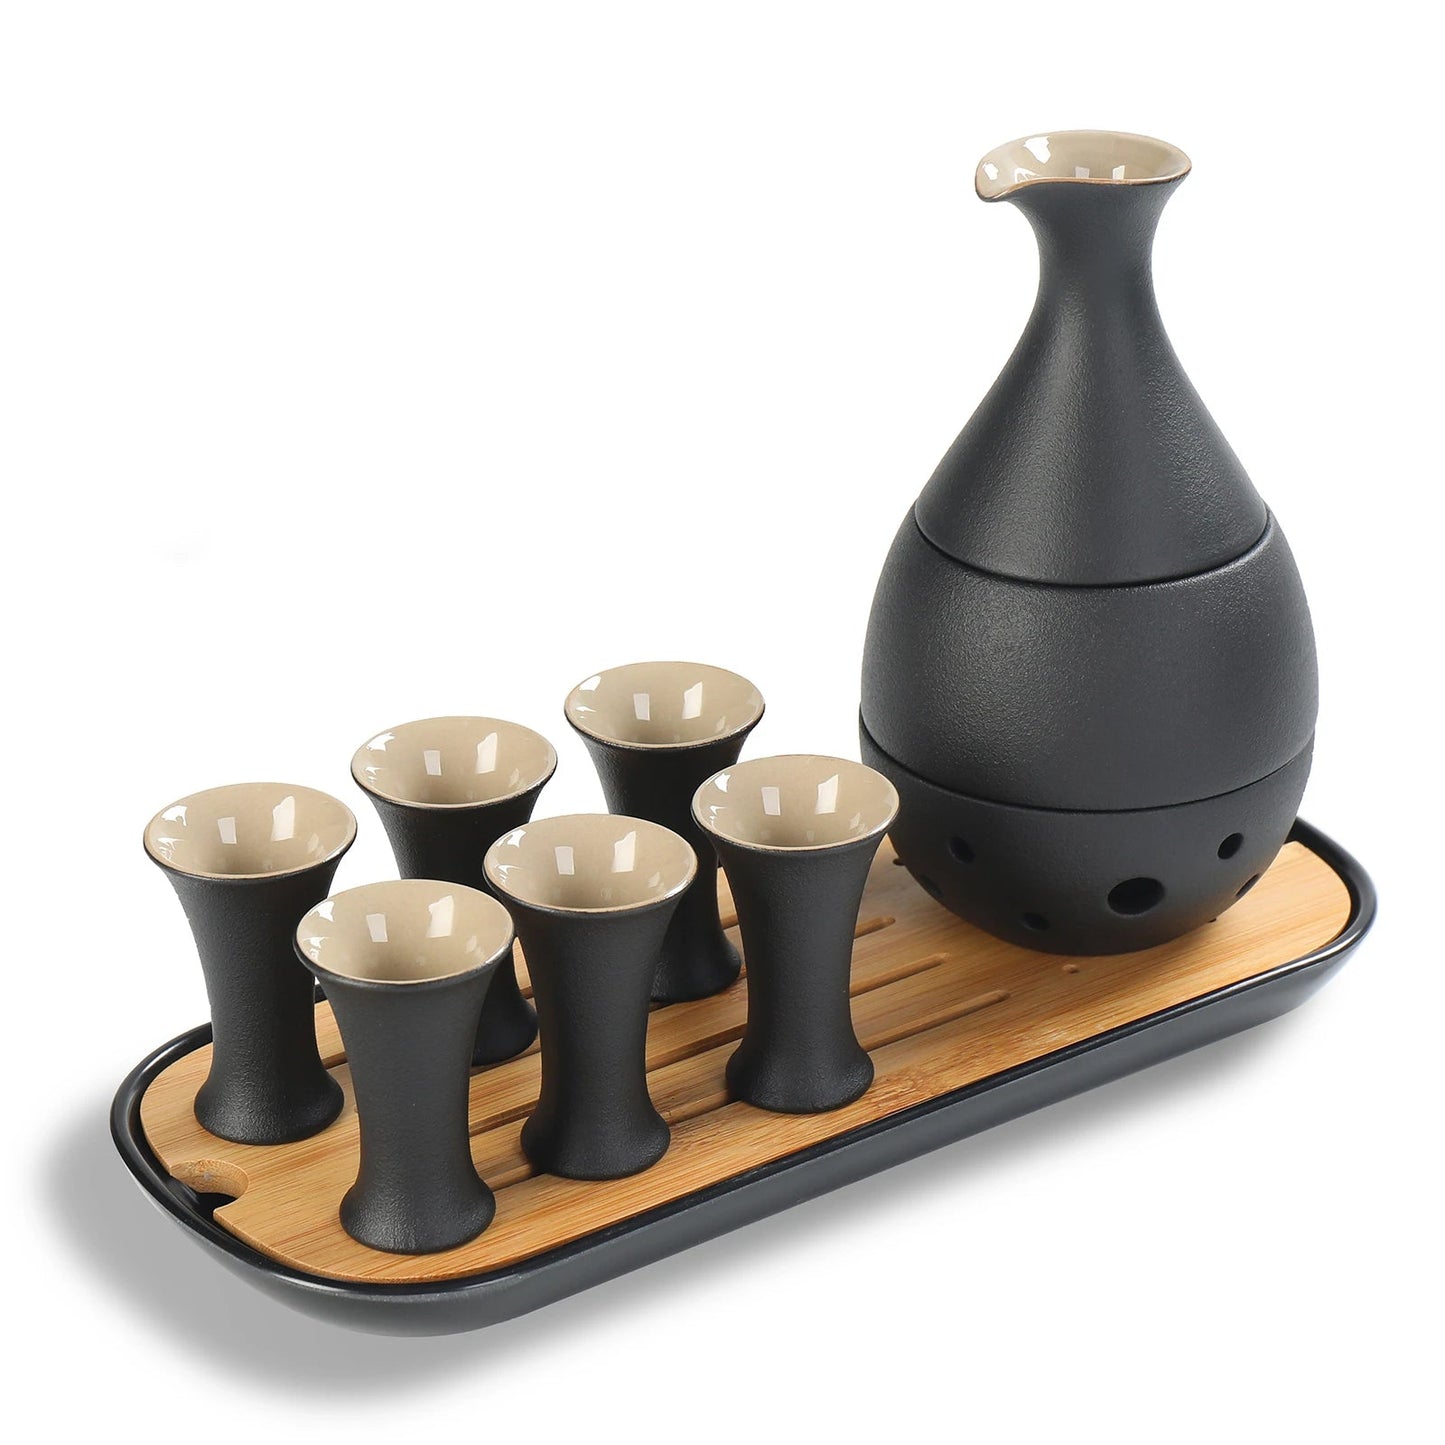 Ceramic Sake Set with Warmer, 10pcs/set, 2 Packing Options Available